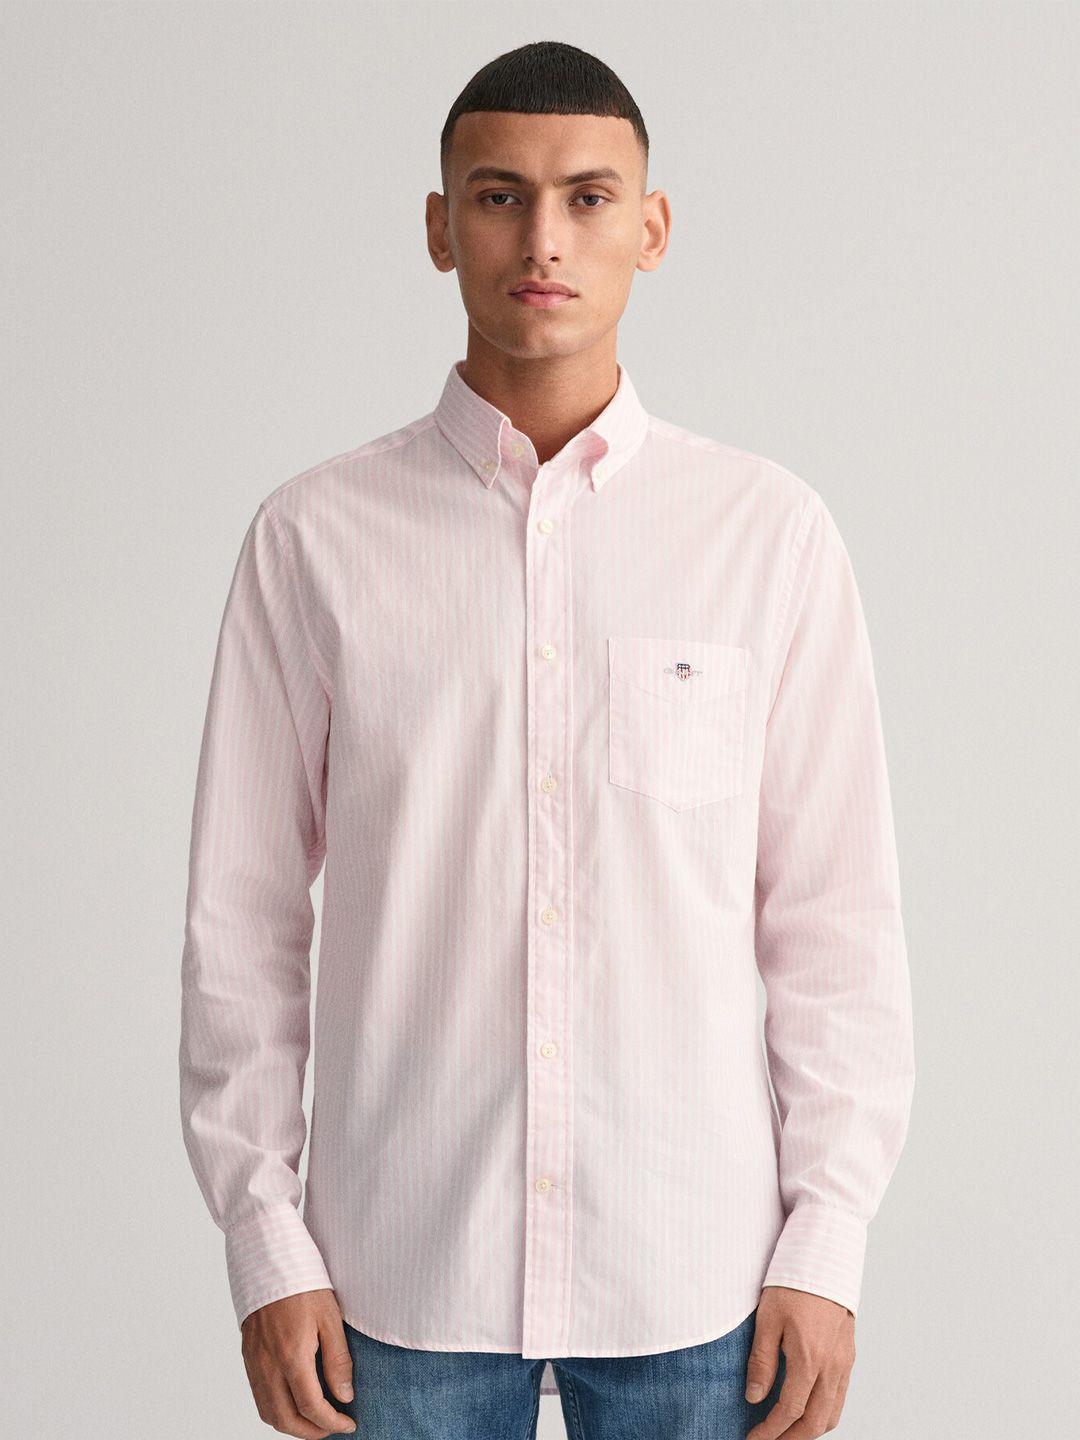 gant vertical striped button-down collar casual pure cotton shirt